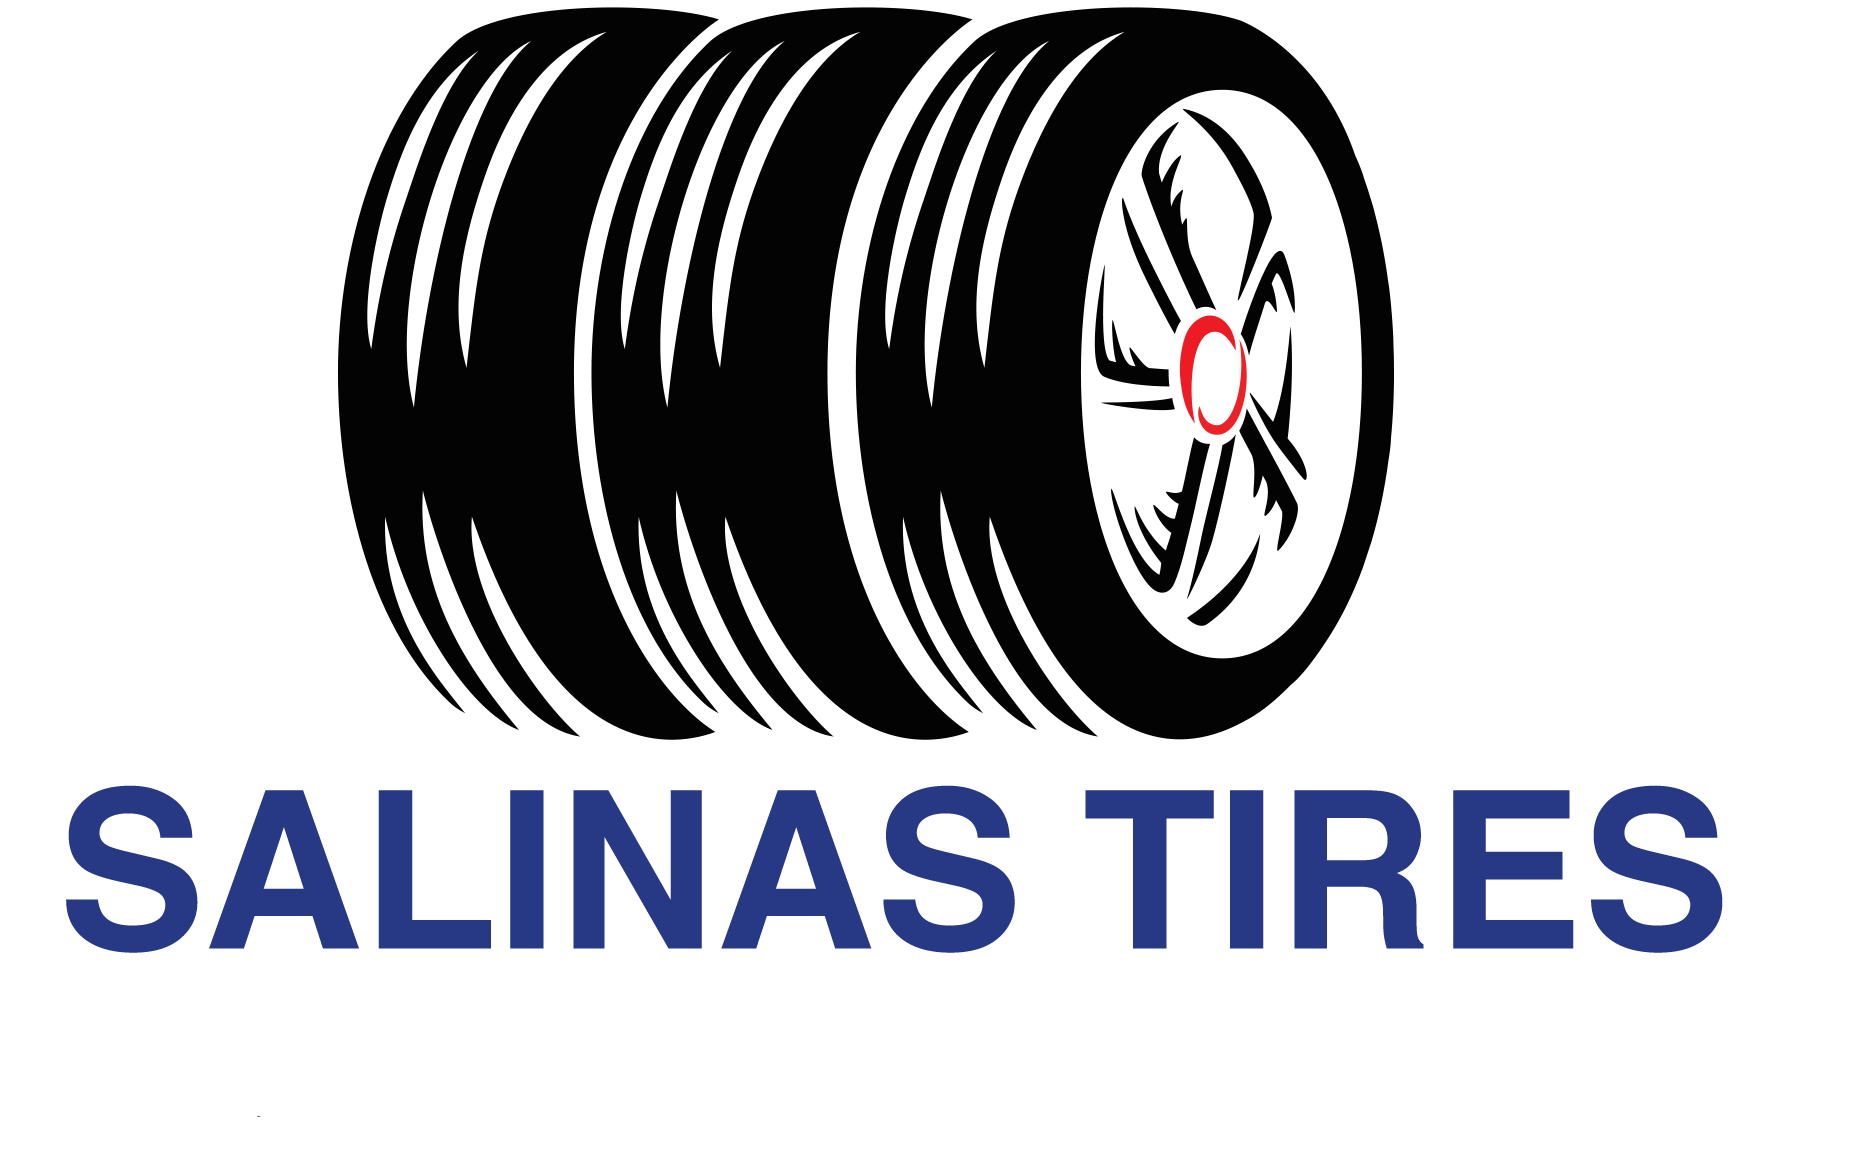 Salinas Tires, whittier